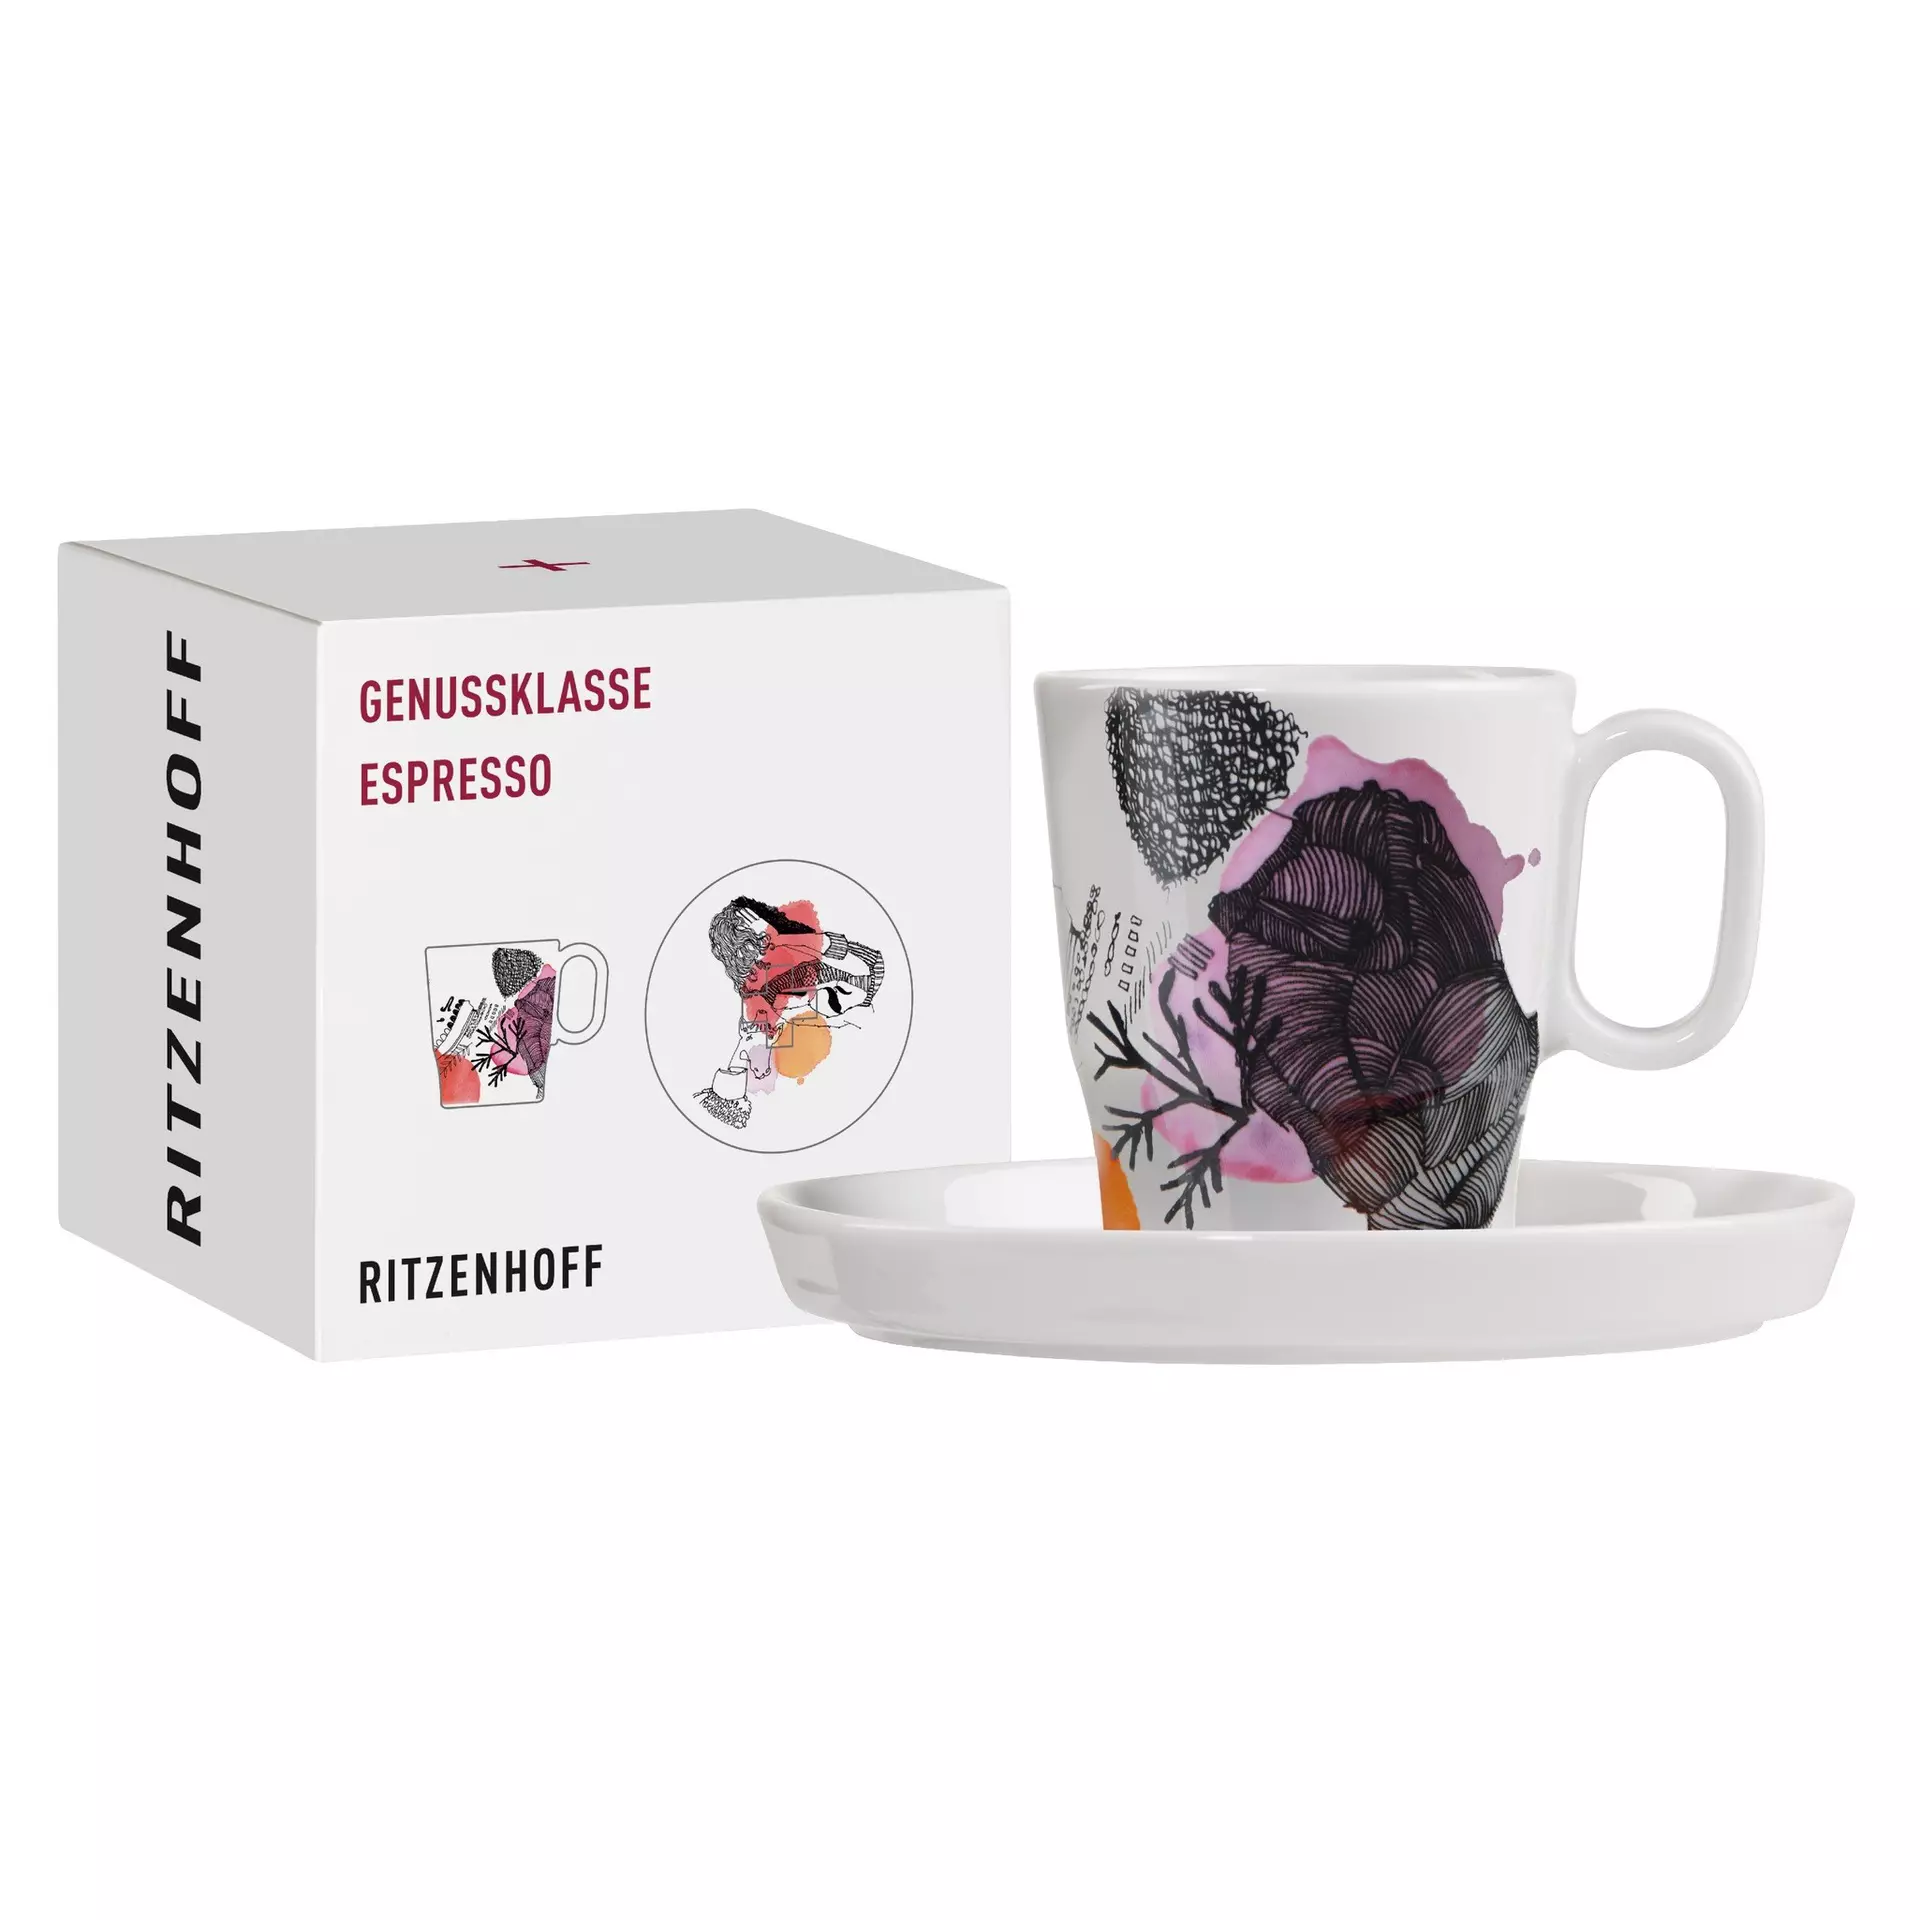 Espressotasse Genussklasse Espresso 002 Ritzenhoff Keramik 6 x 